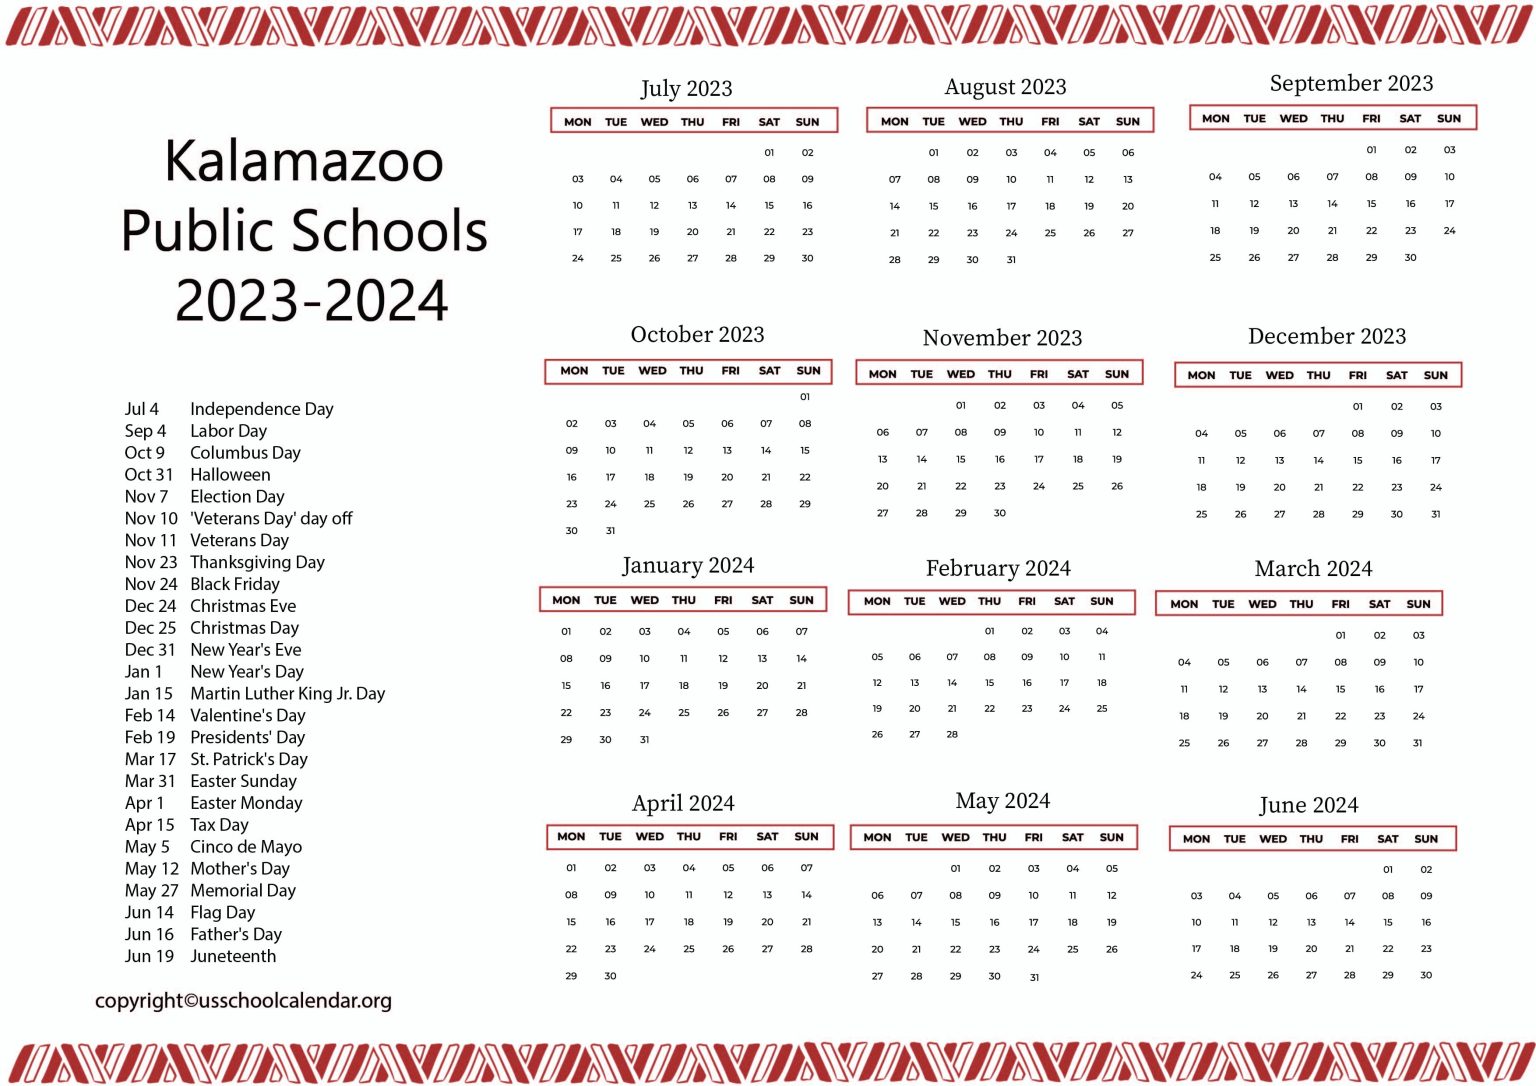 kalamazoo-public-schools-calendar-with-holidays-2023-2024